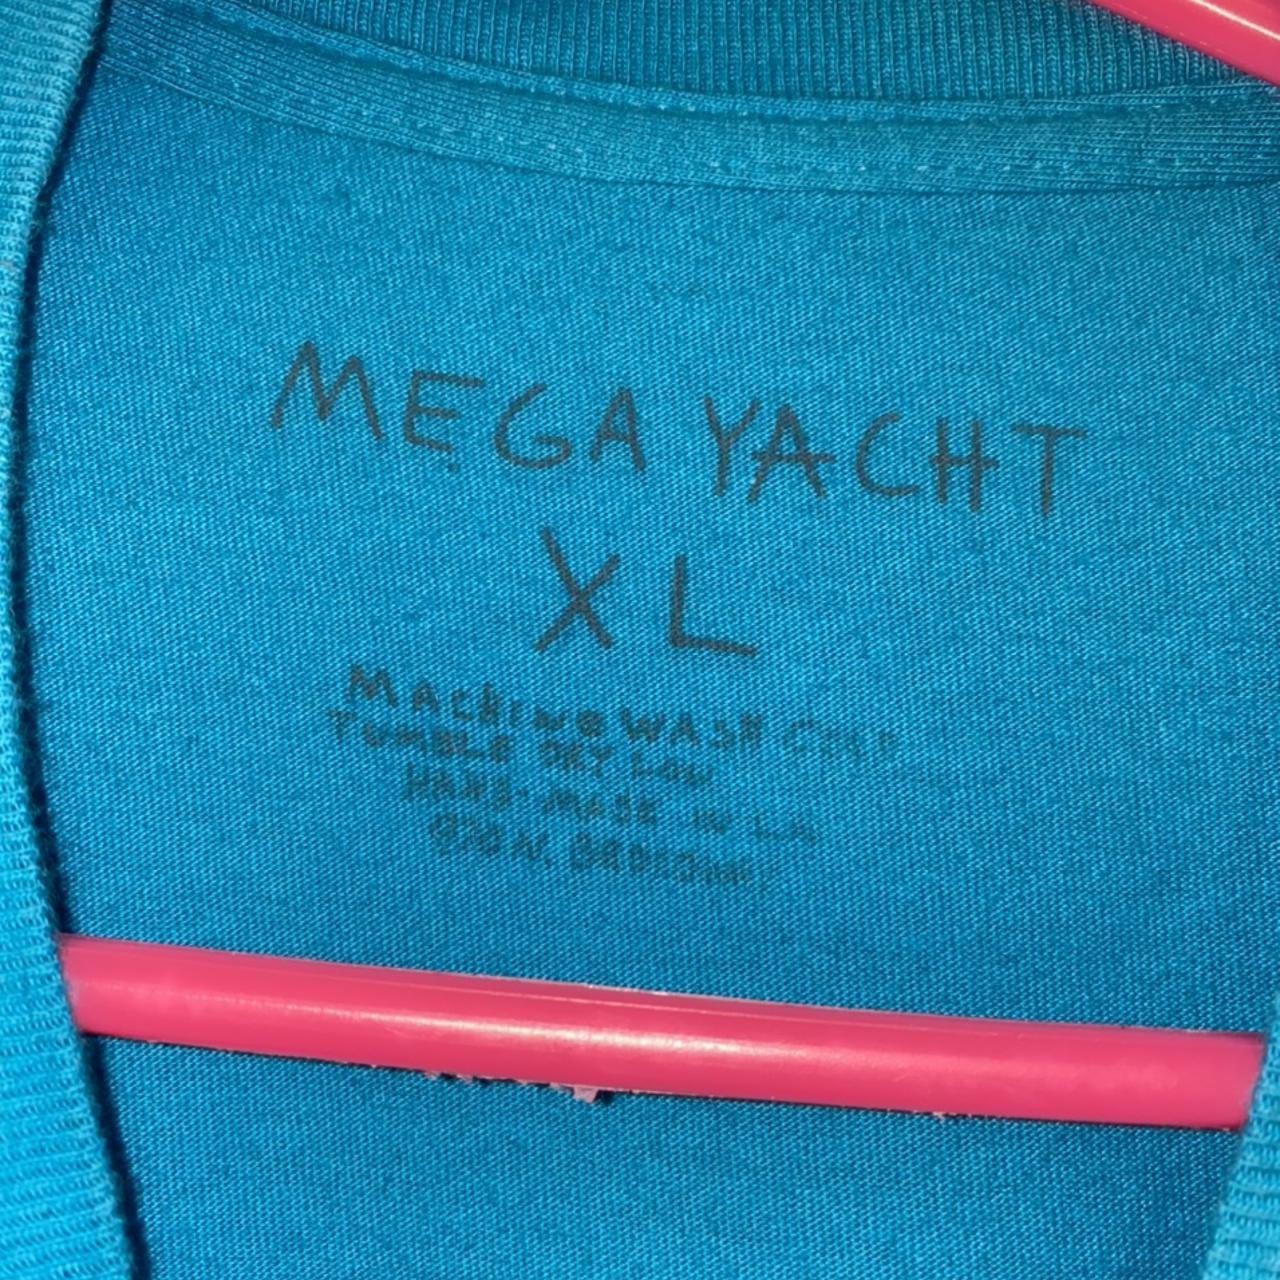 Mega Yacht Louis Vuitton Casper tee , Size : XL, Worn